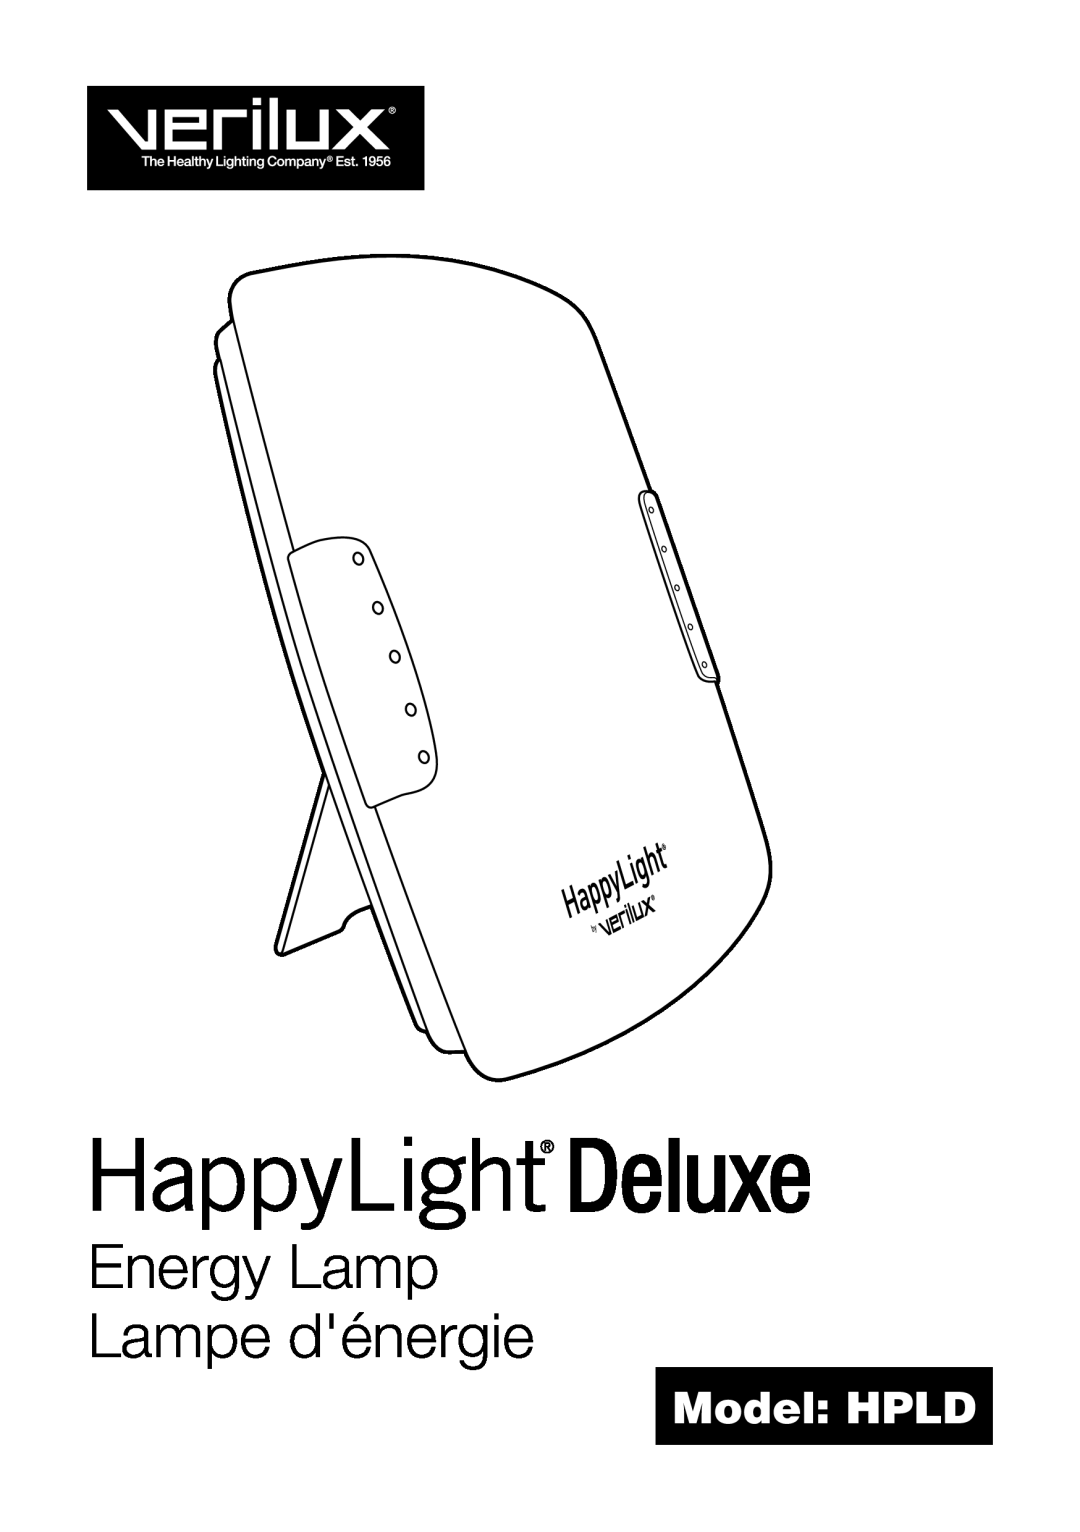 Verilux manual Energy Lamp Lampe dénergie, Model HPLD 